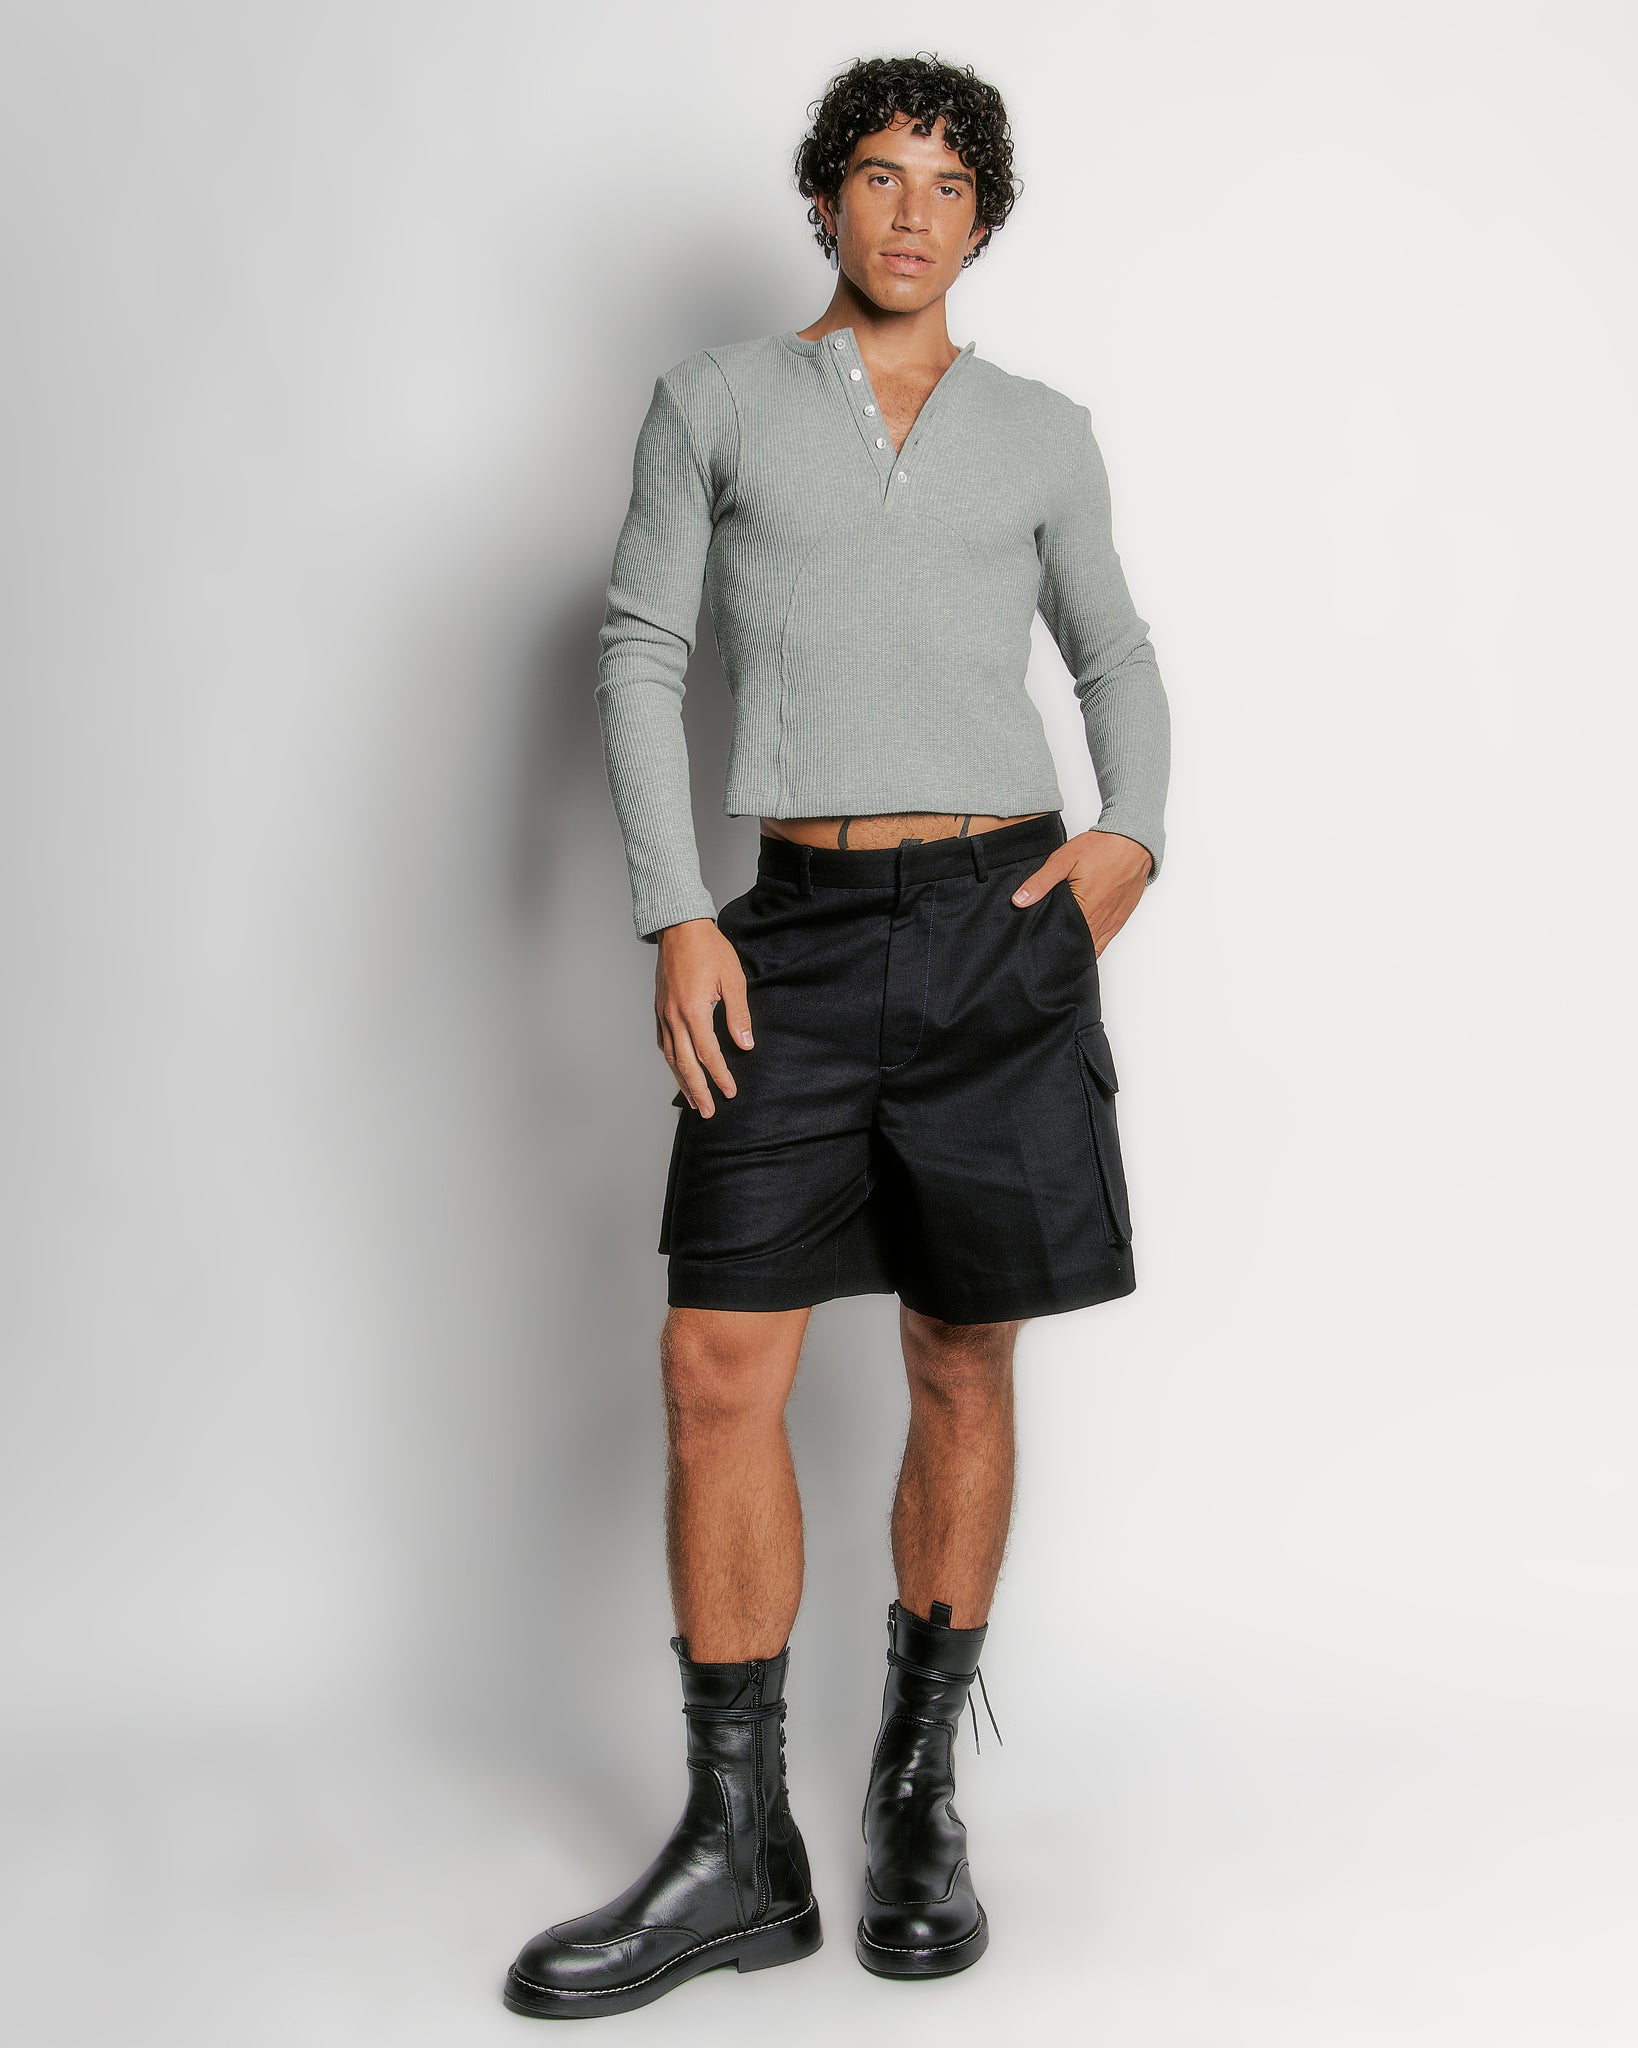 Black "Berlin" Shorts